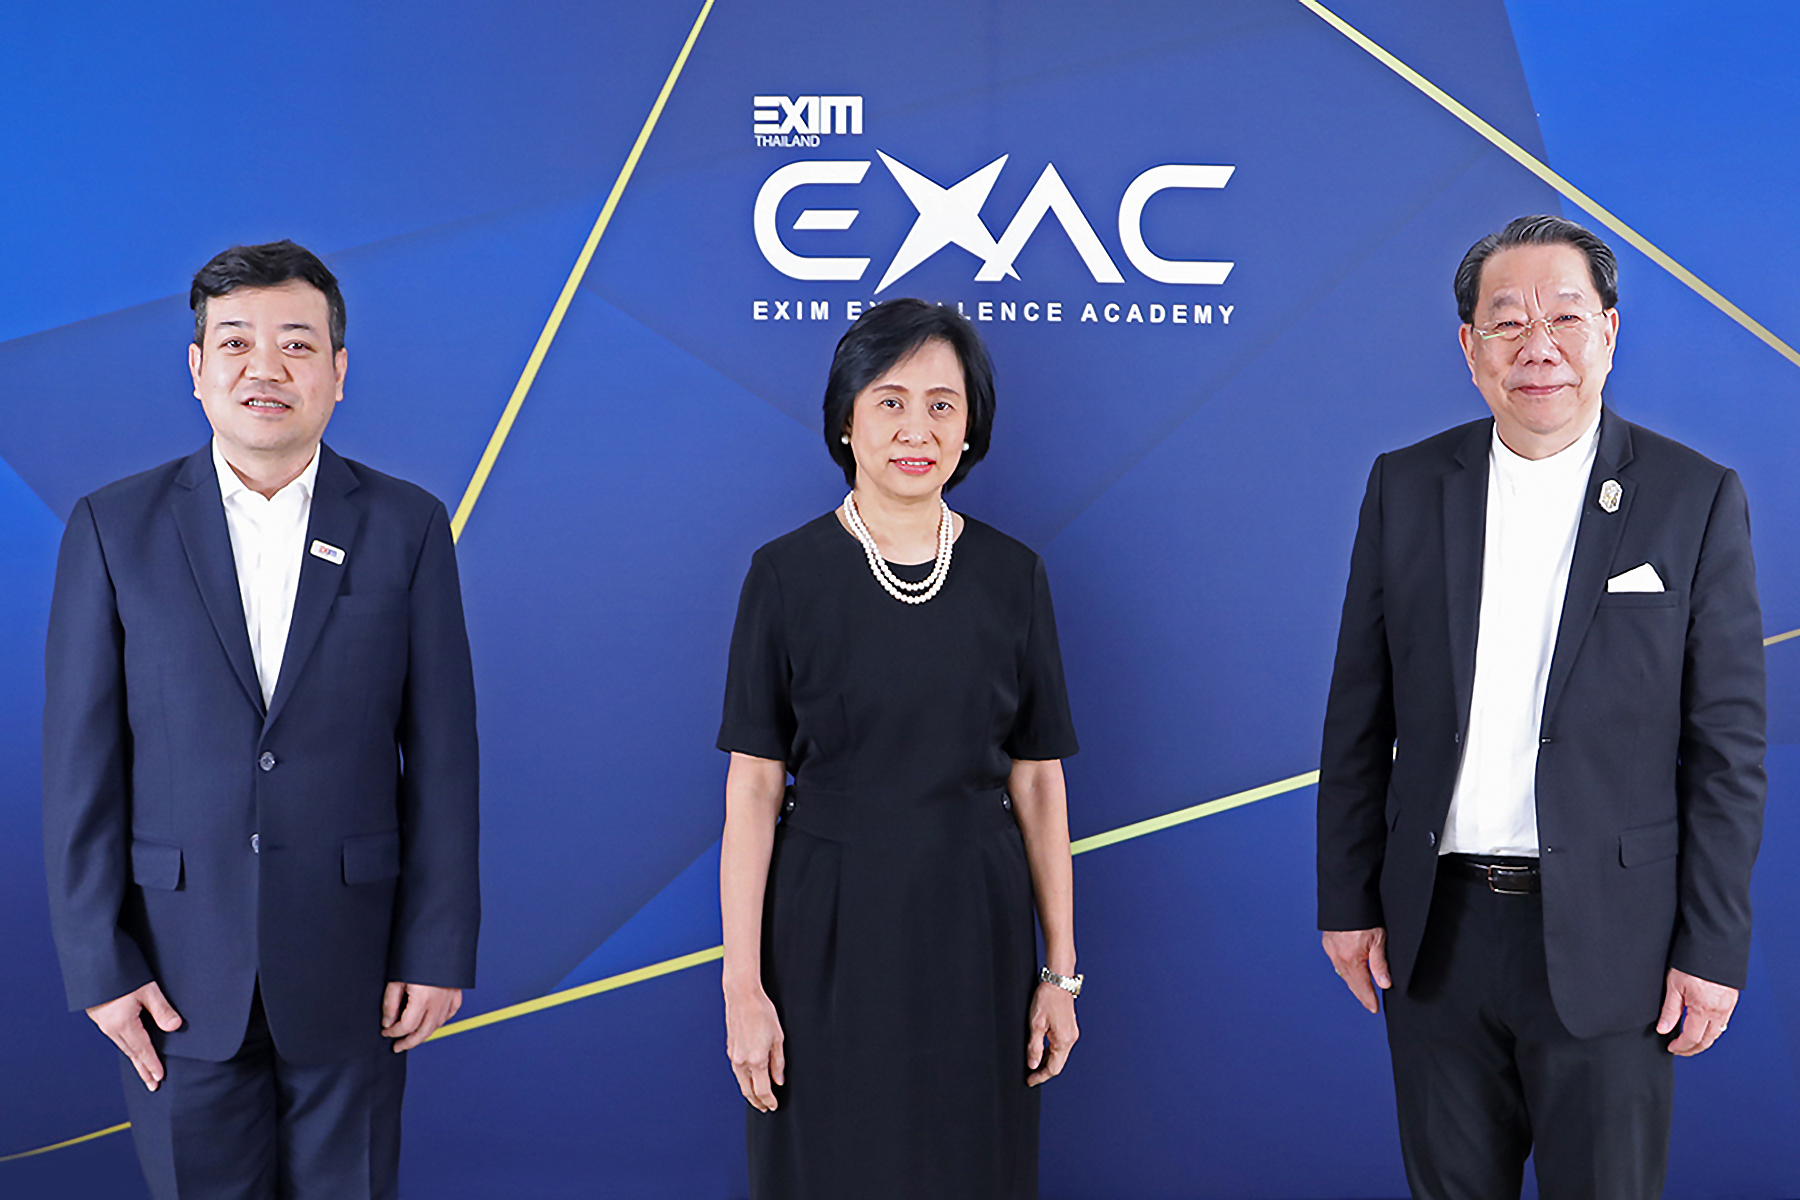 EXIM Thailand Holds Online Advisory Program “Business Reform through Digitalization”